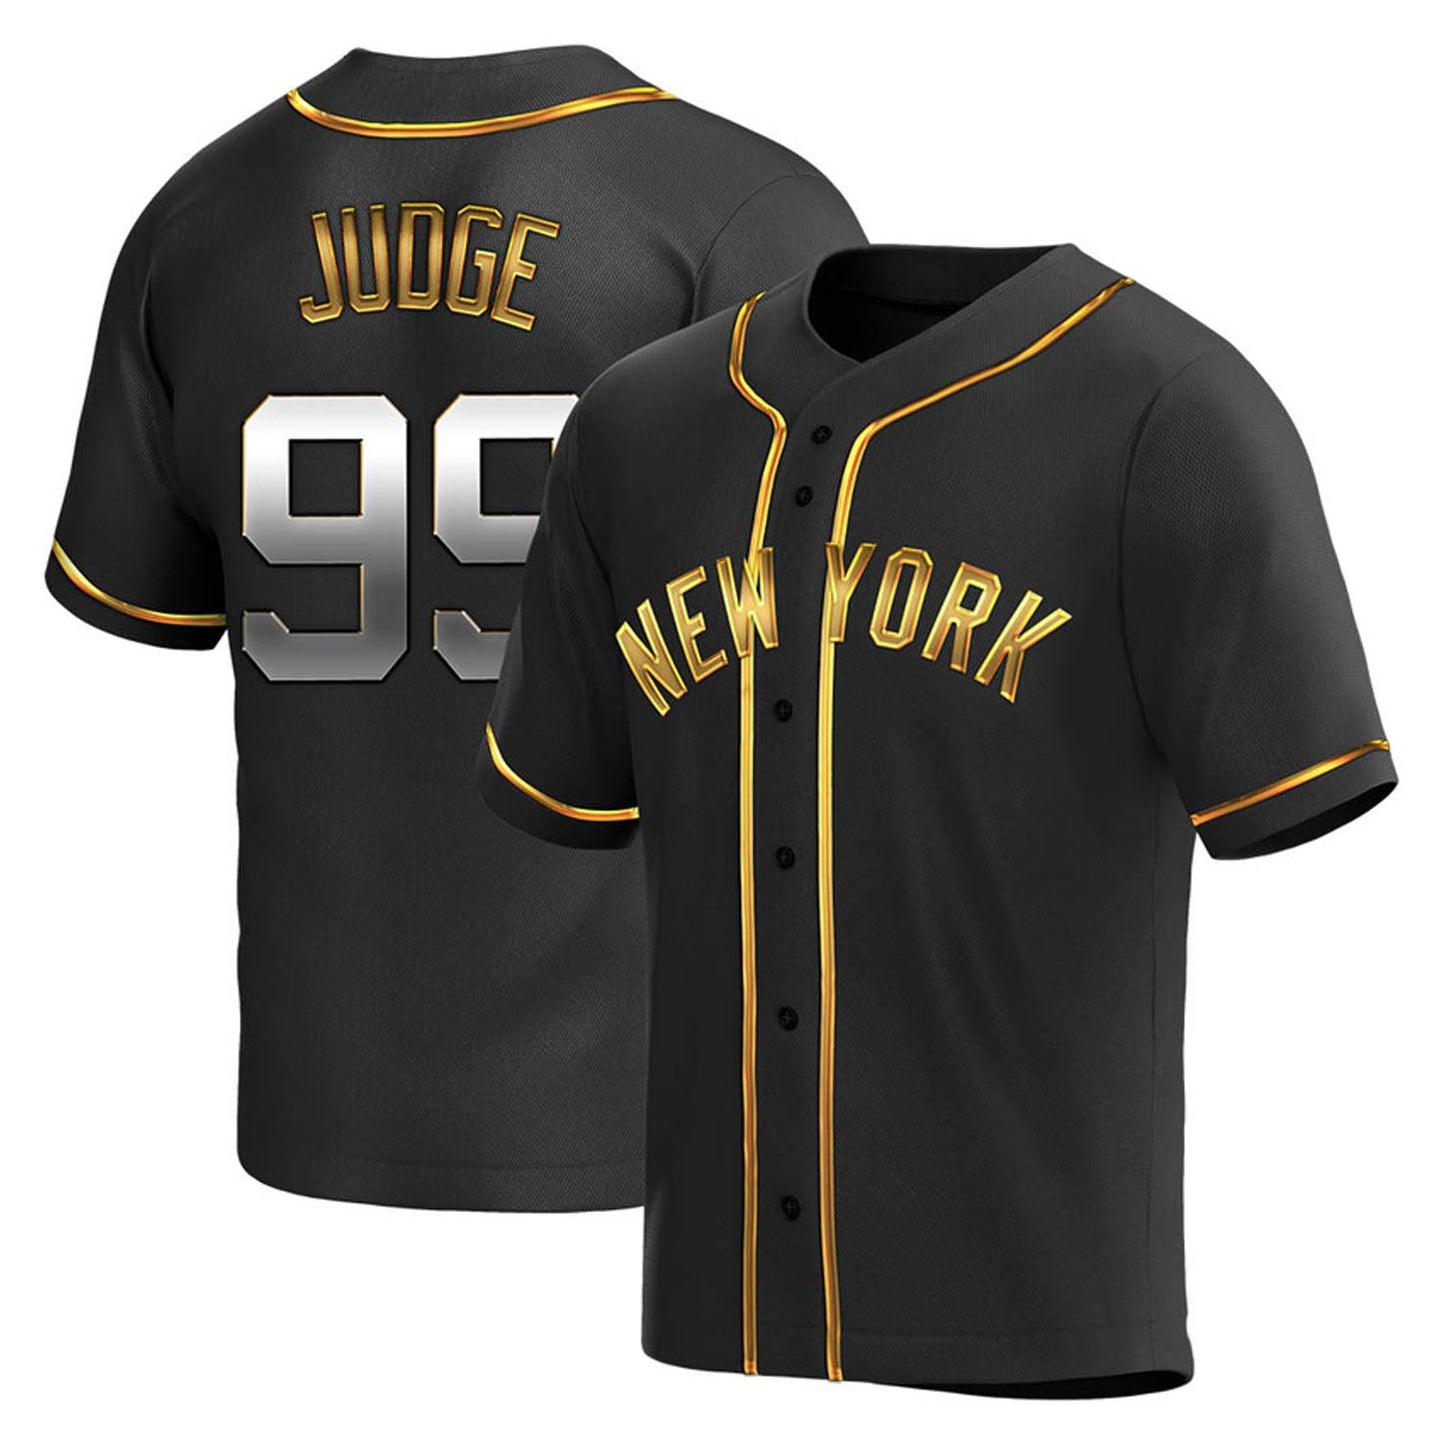 MLB Aaron Judge New York Yankees 99 Jersey